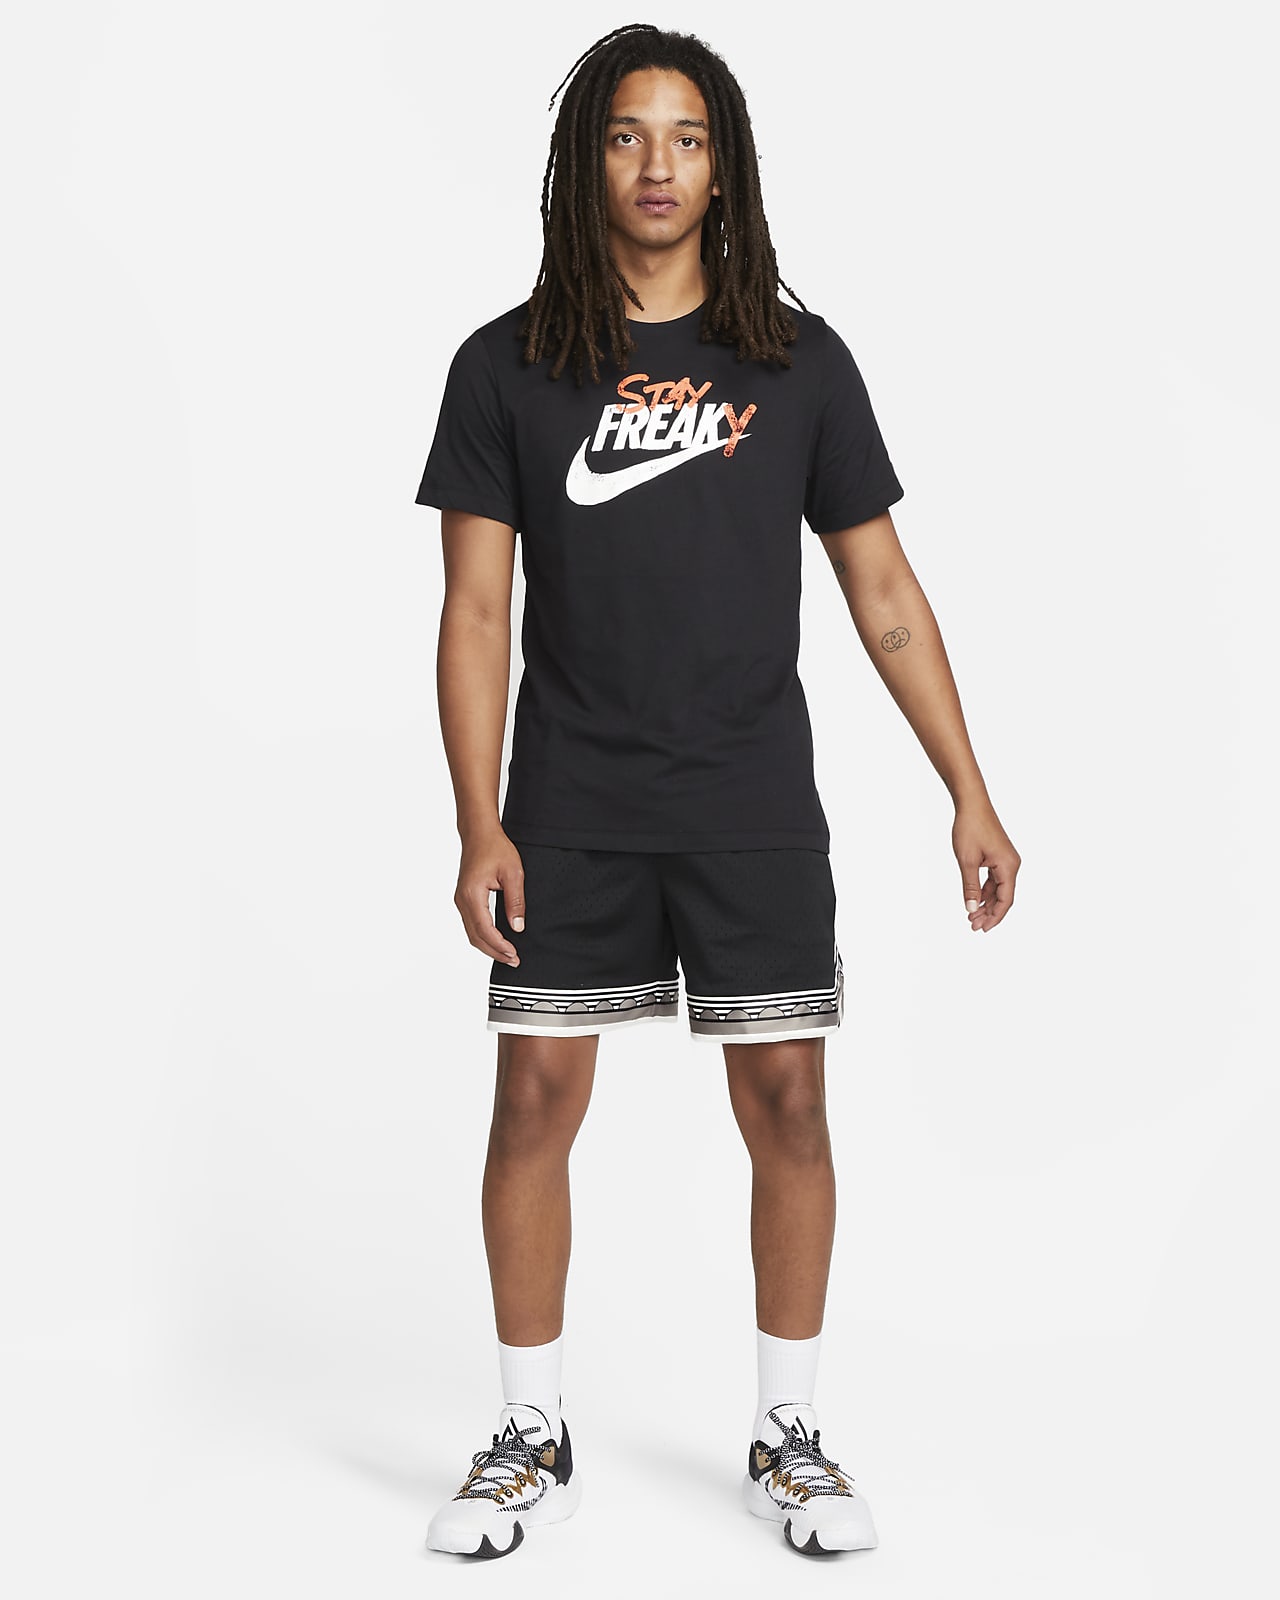 Nike Basketball Tee 